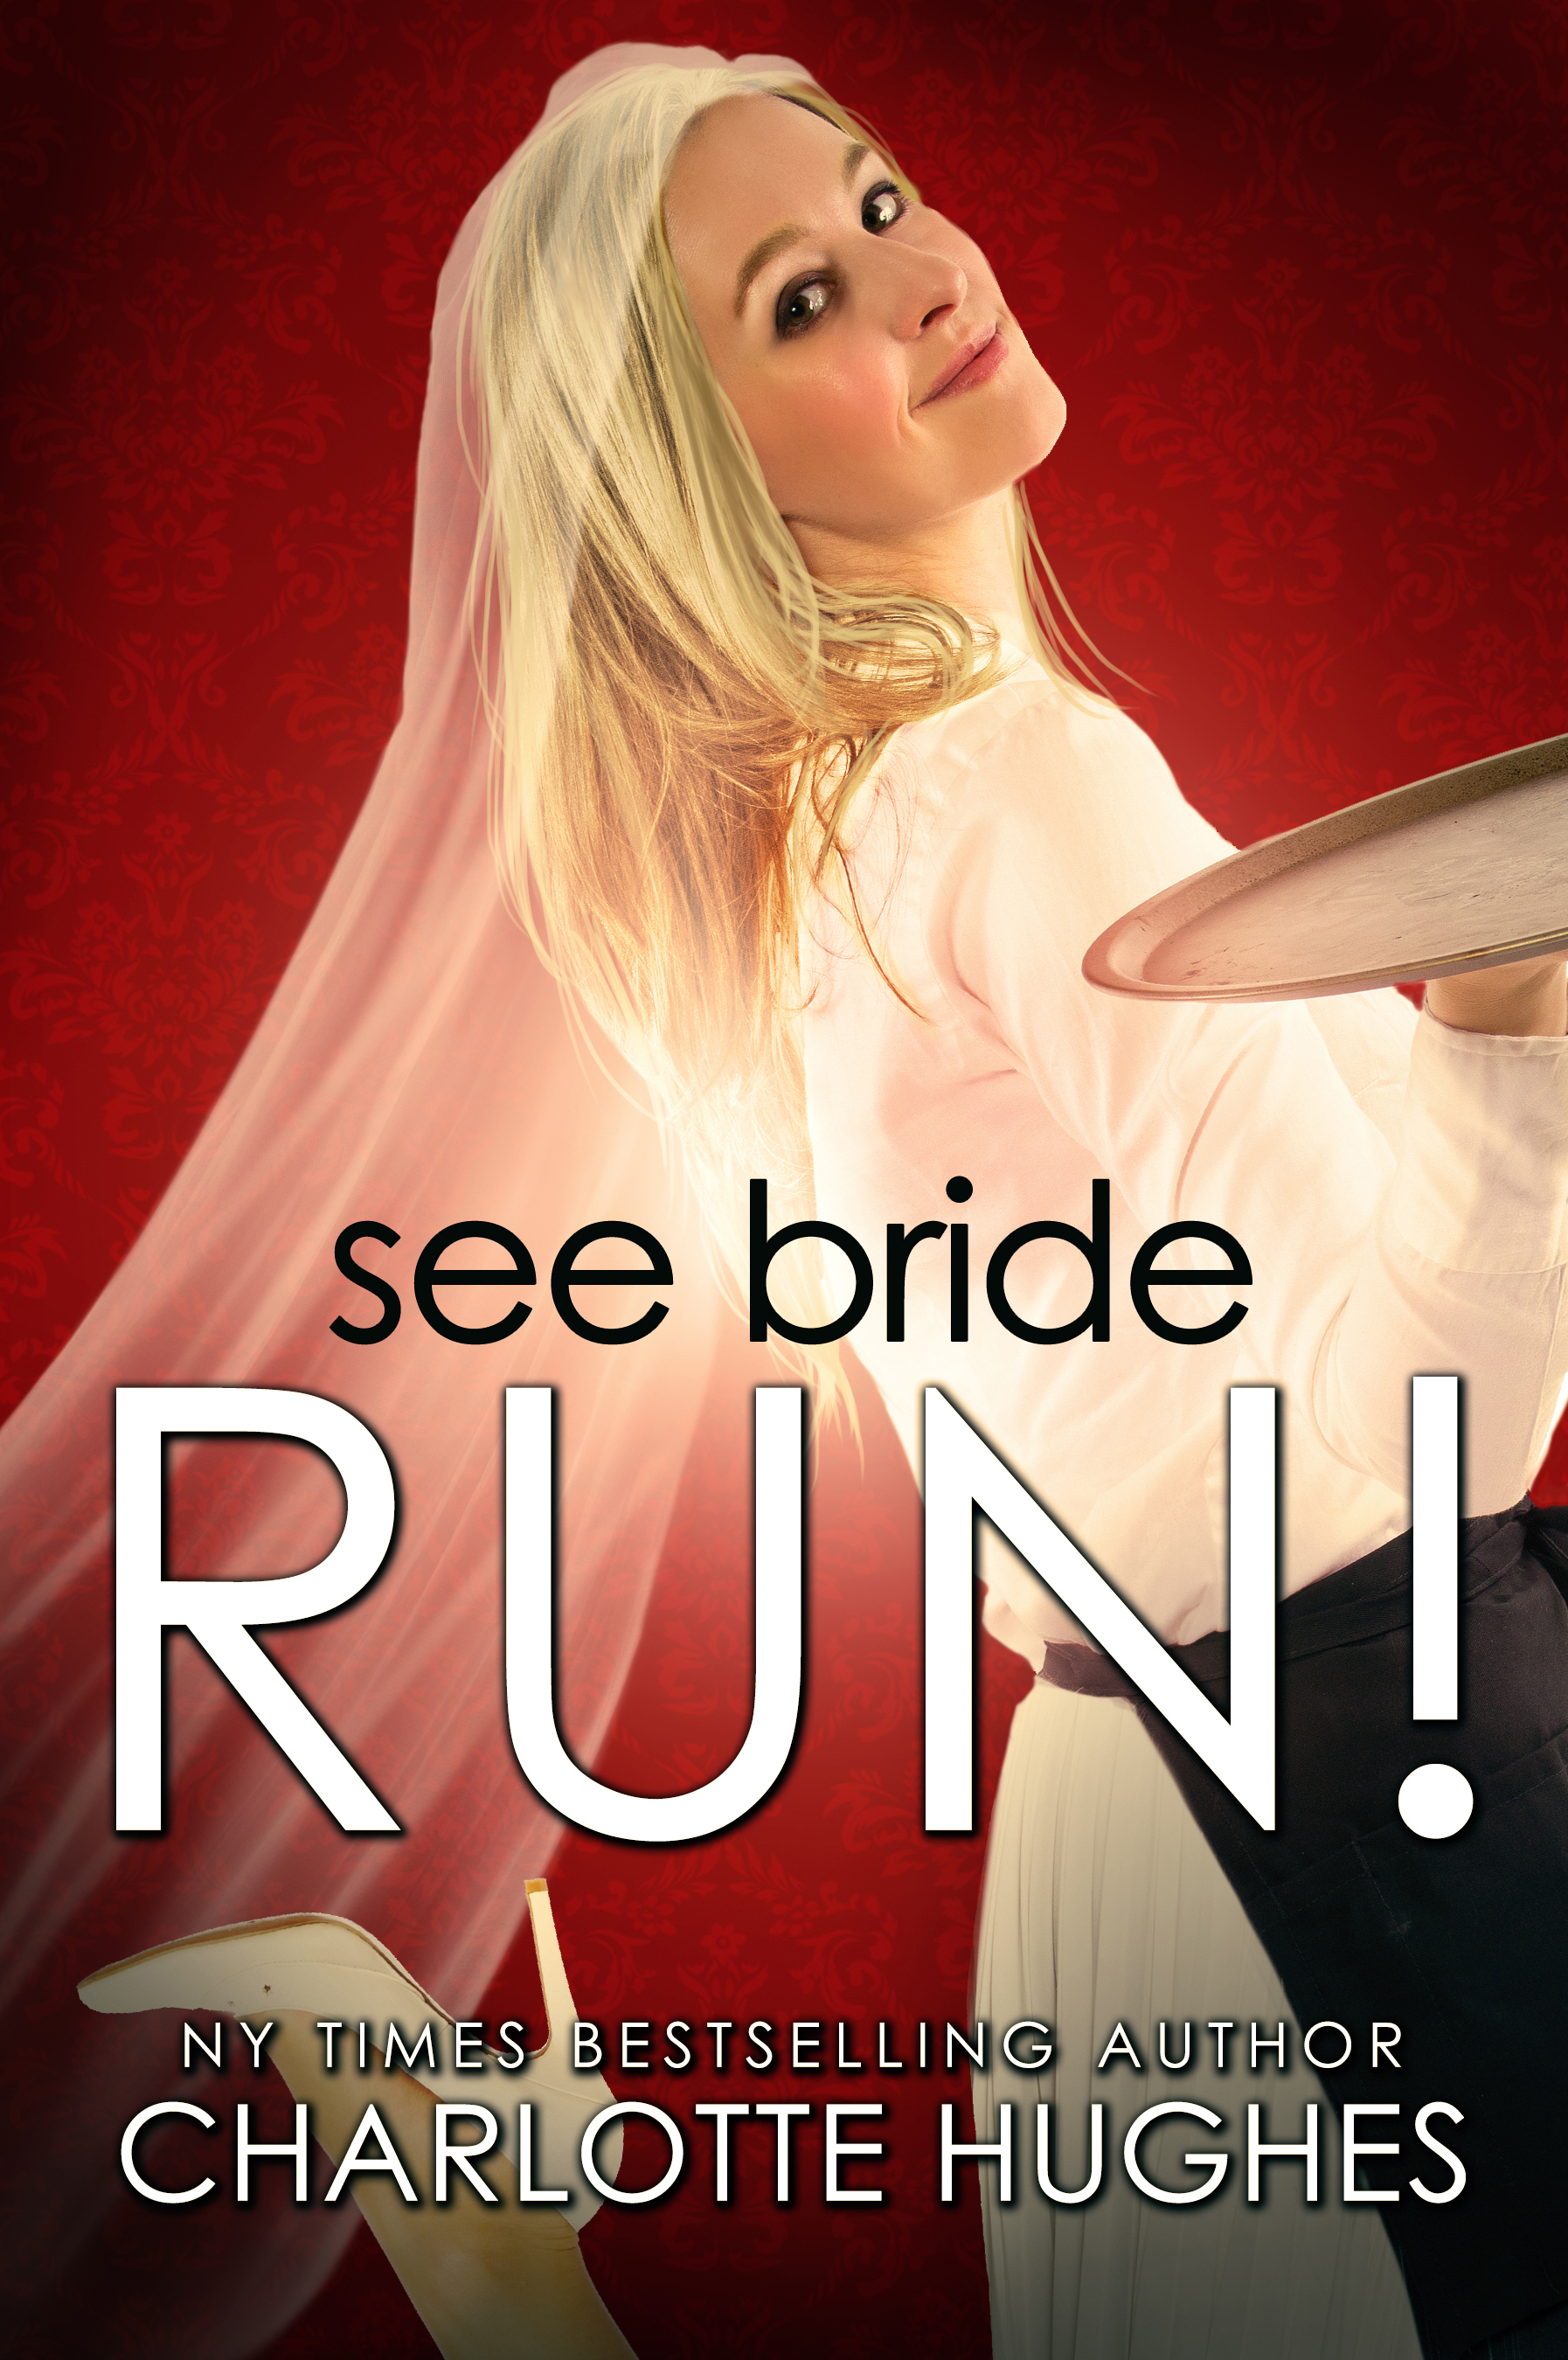 See Bride Run! by Charlotte Hughes